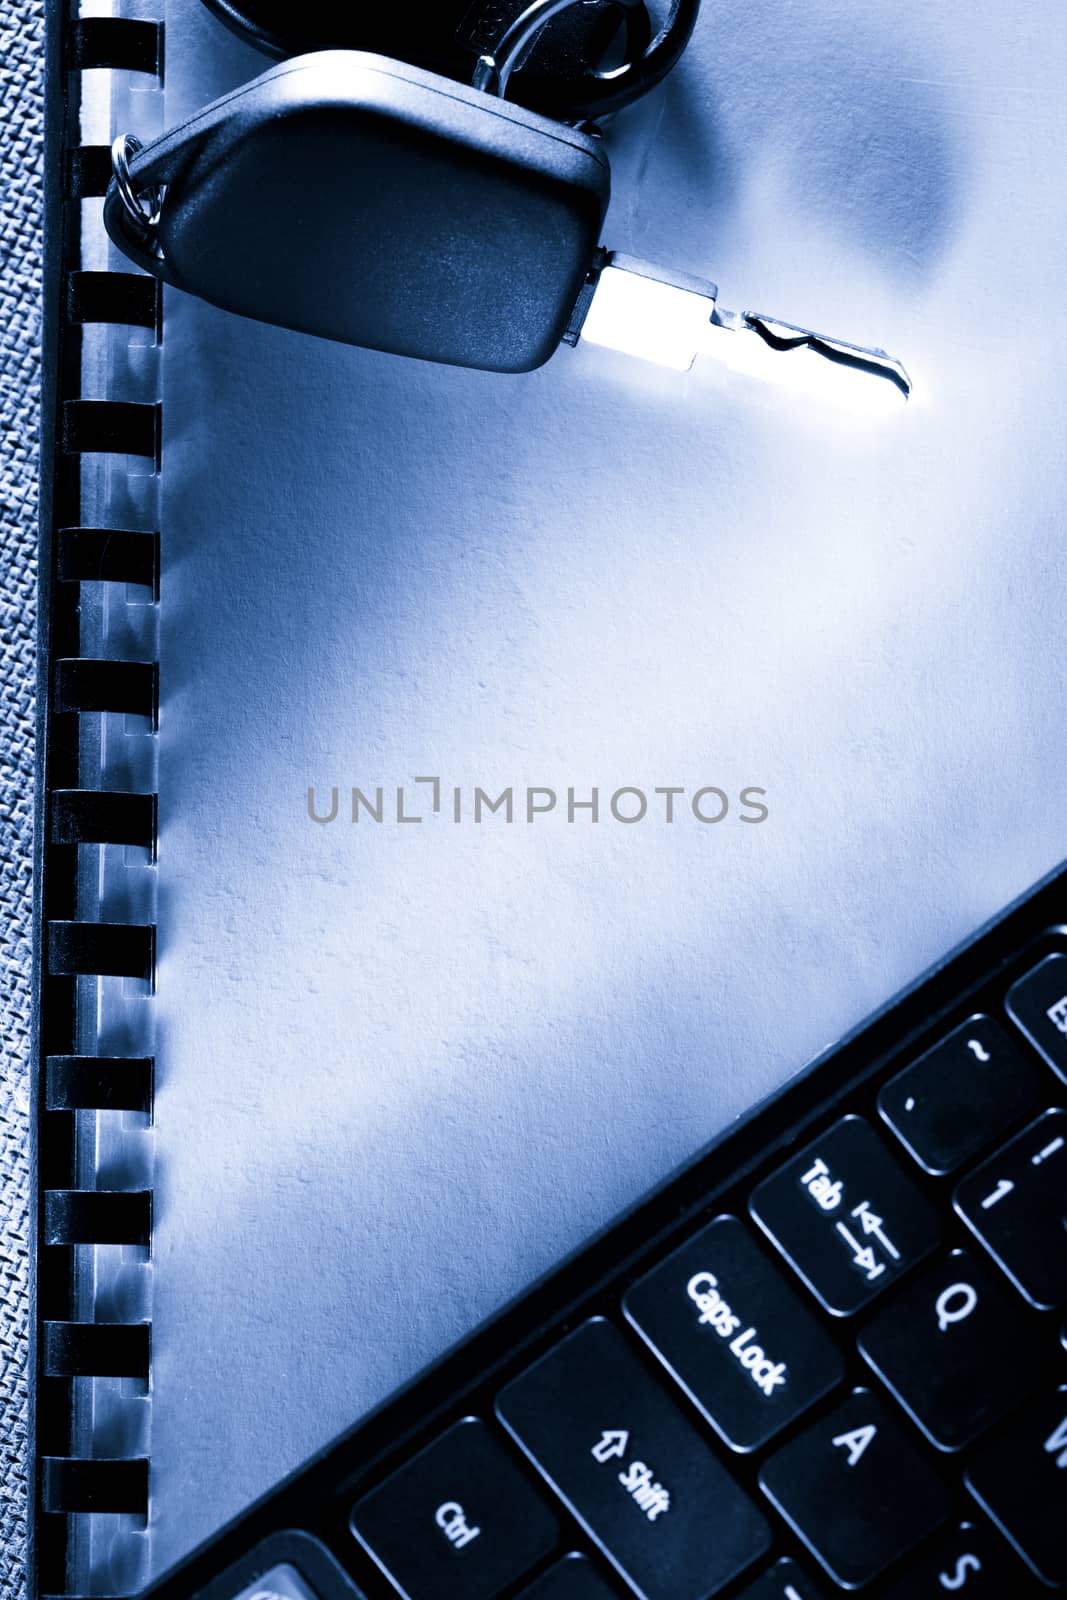 Notebook, car key and computer keyboard by Garsya